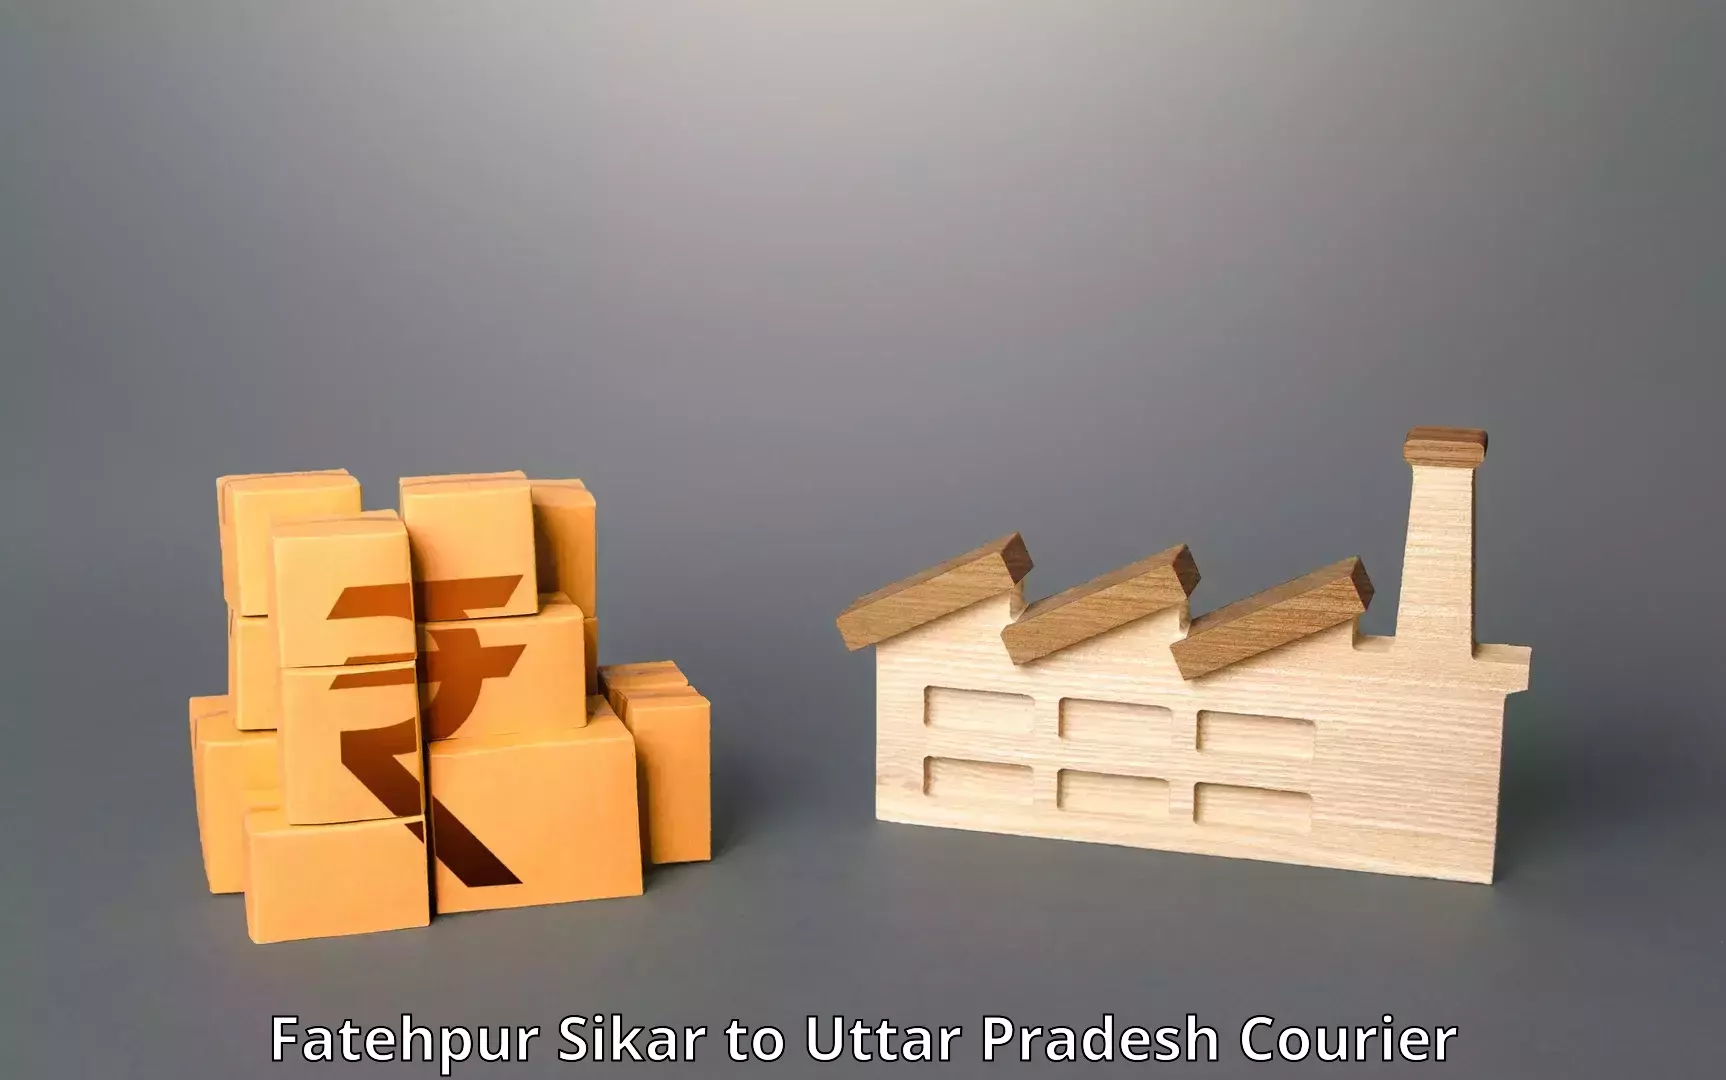 High-performance logistics Fatehpur Sikar to Sirathu